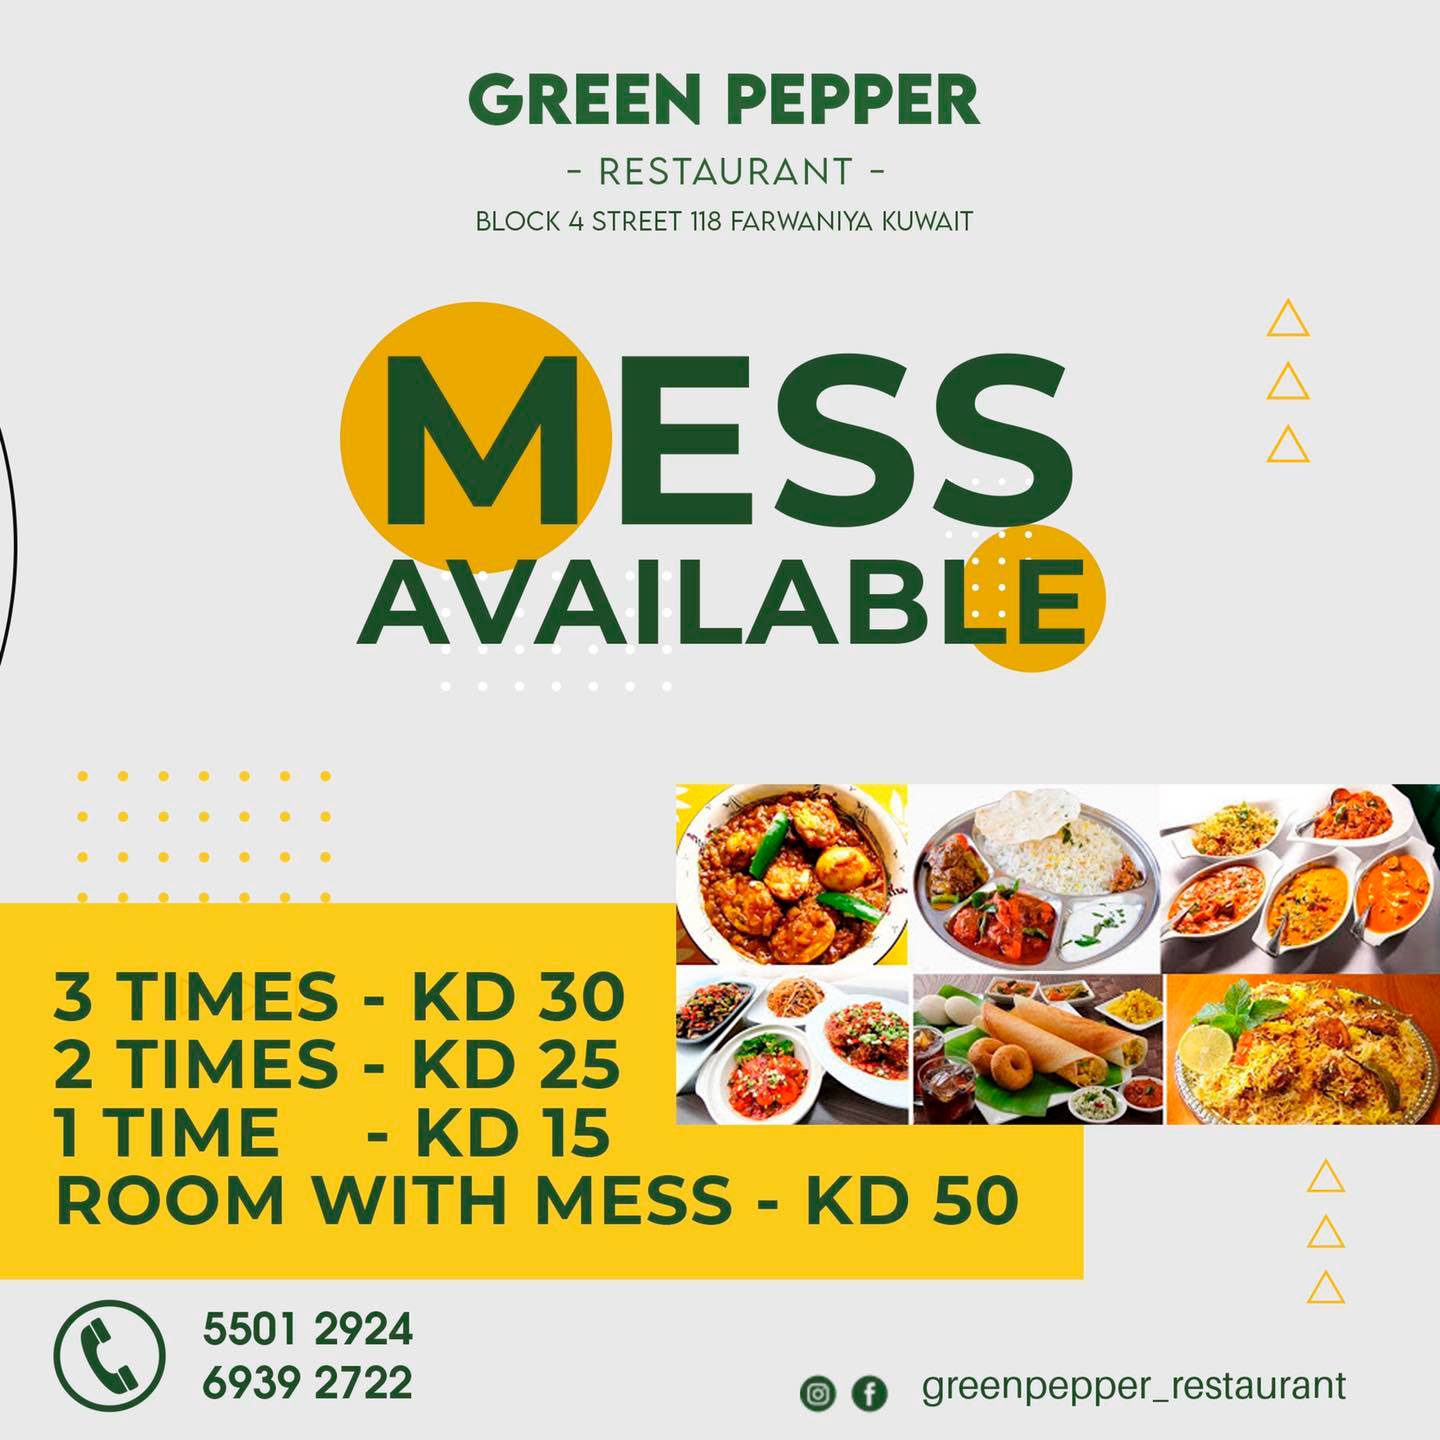 Green Pepper Restaurant Kuwait